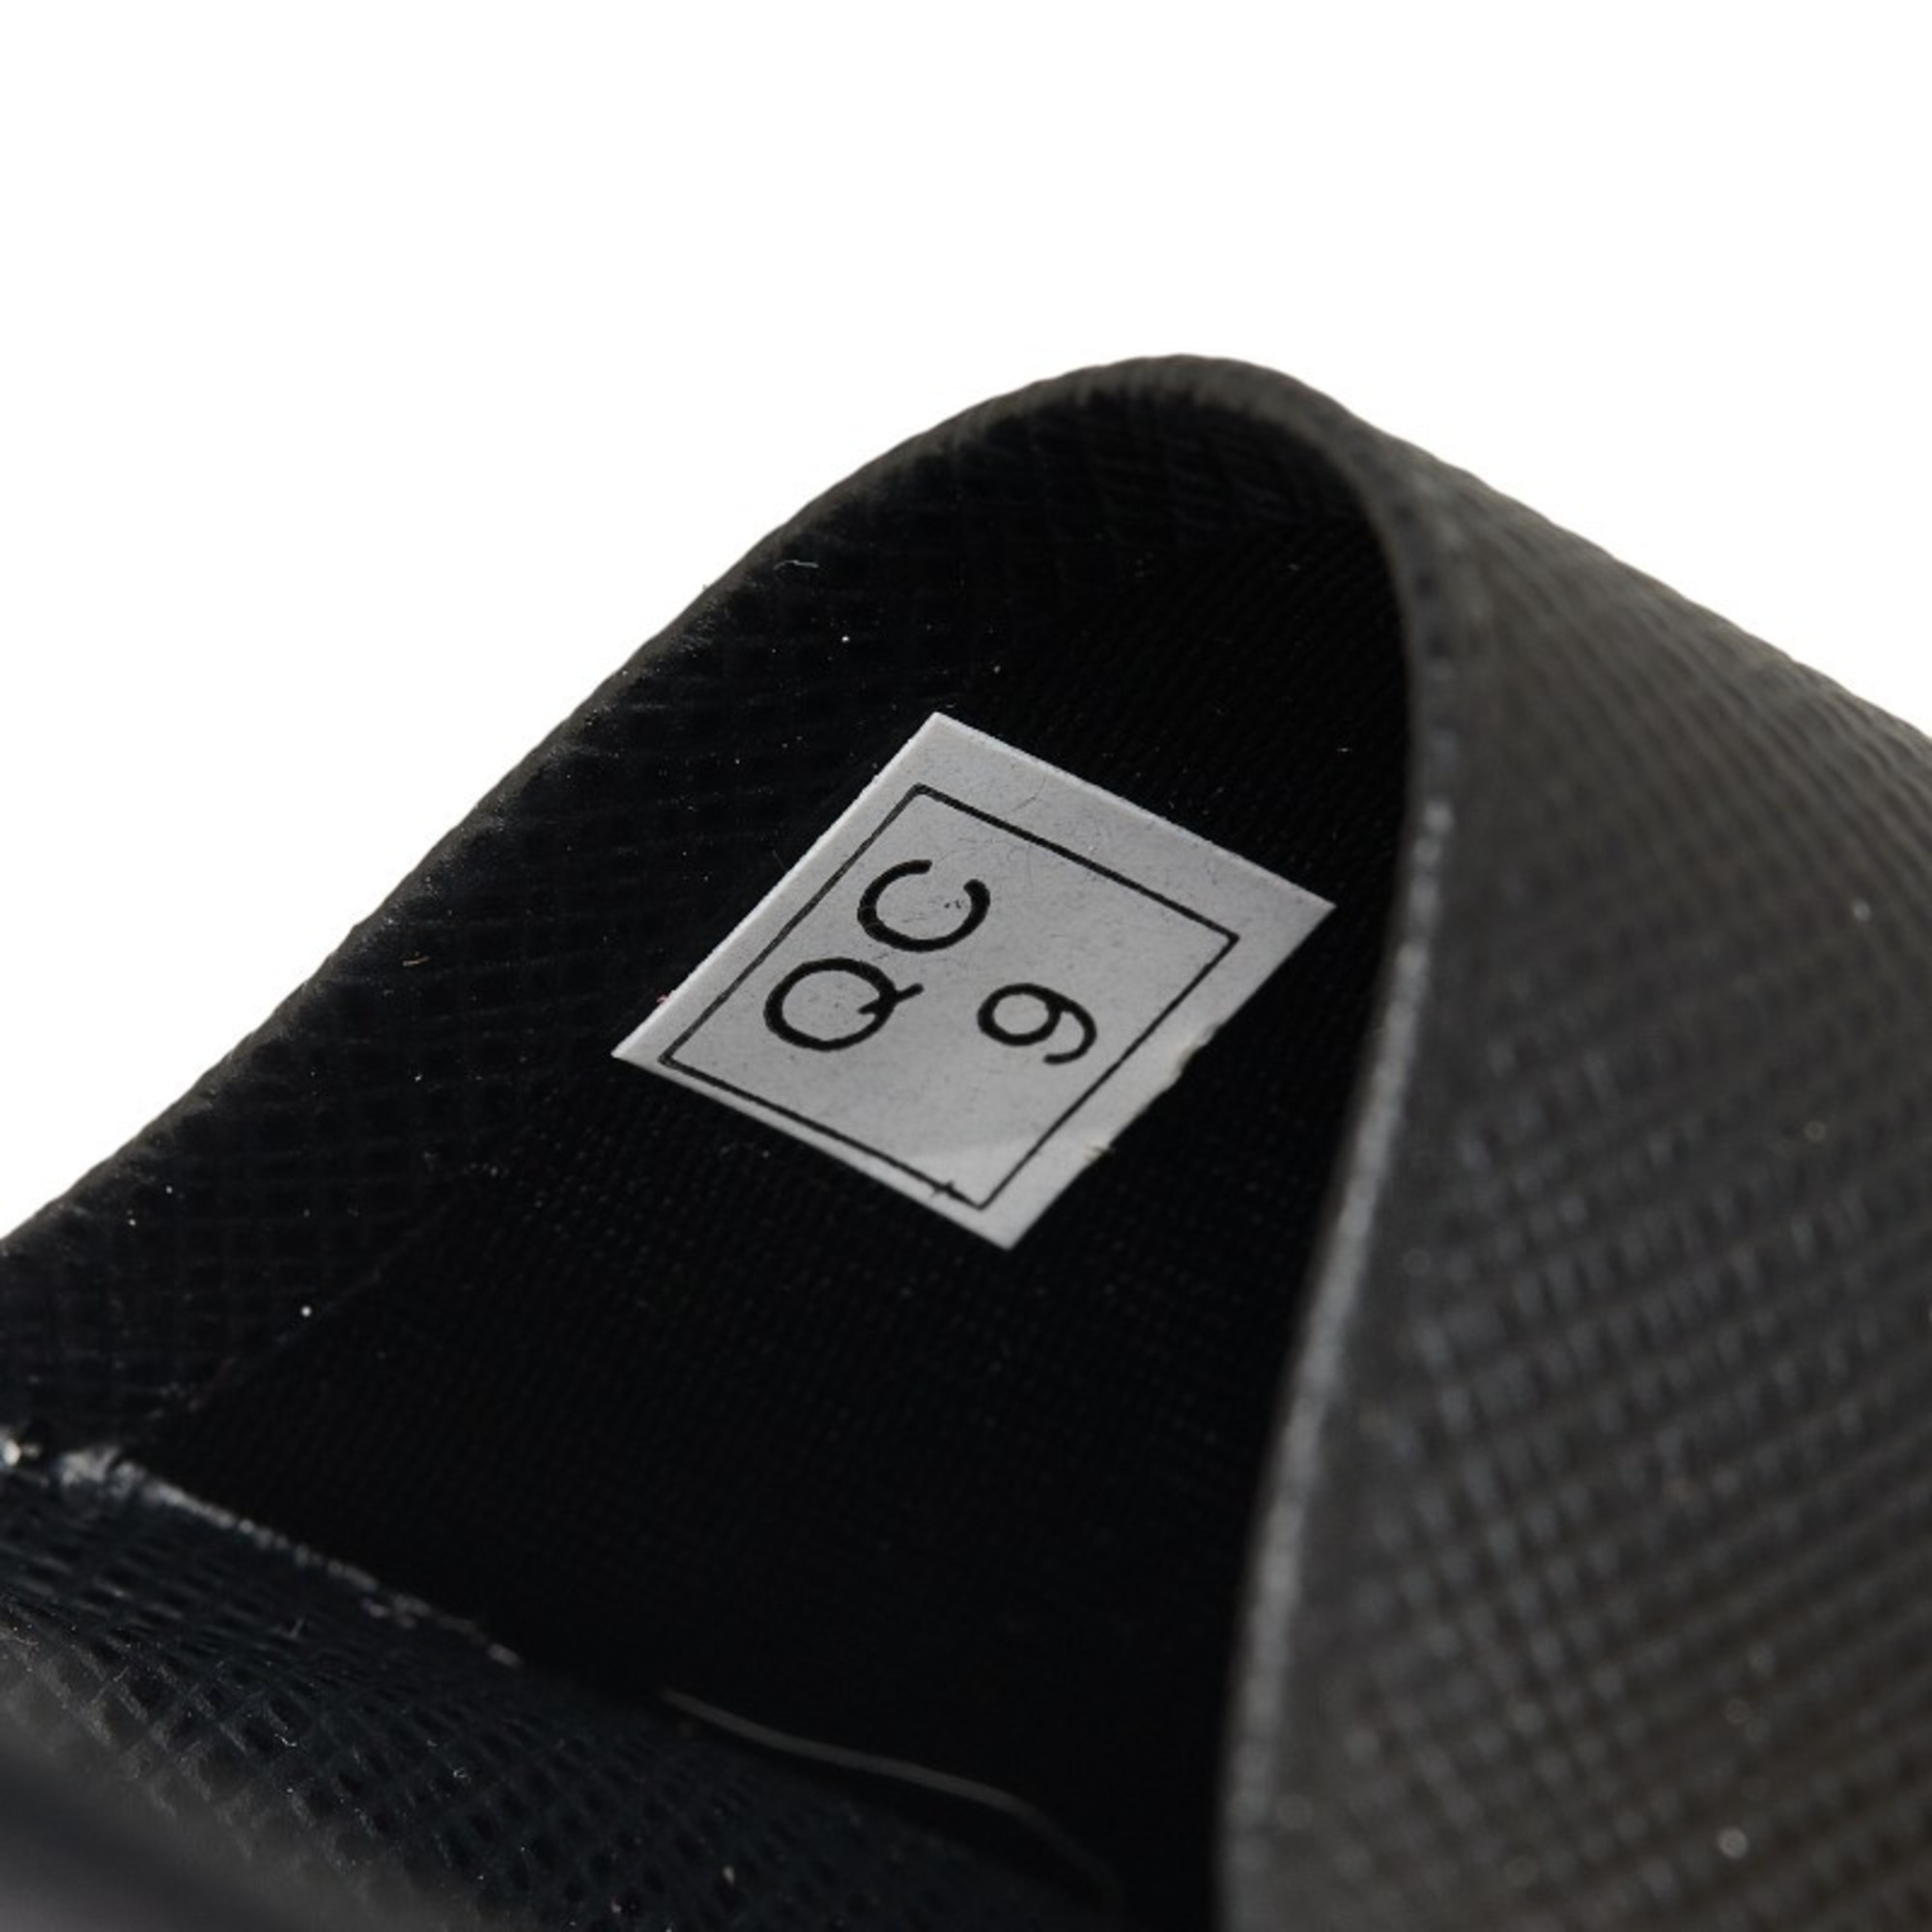 Prada Saffiano 6-series key case 1PG222 black leather ladies PRADA